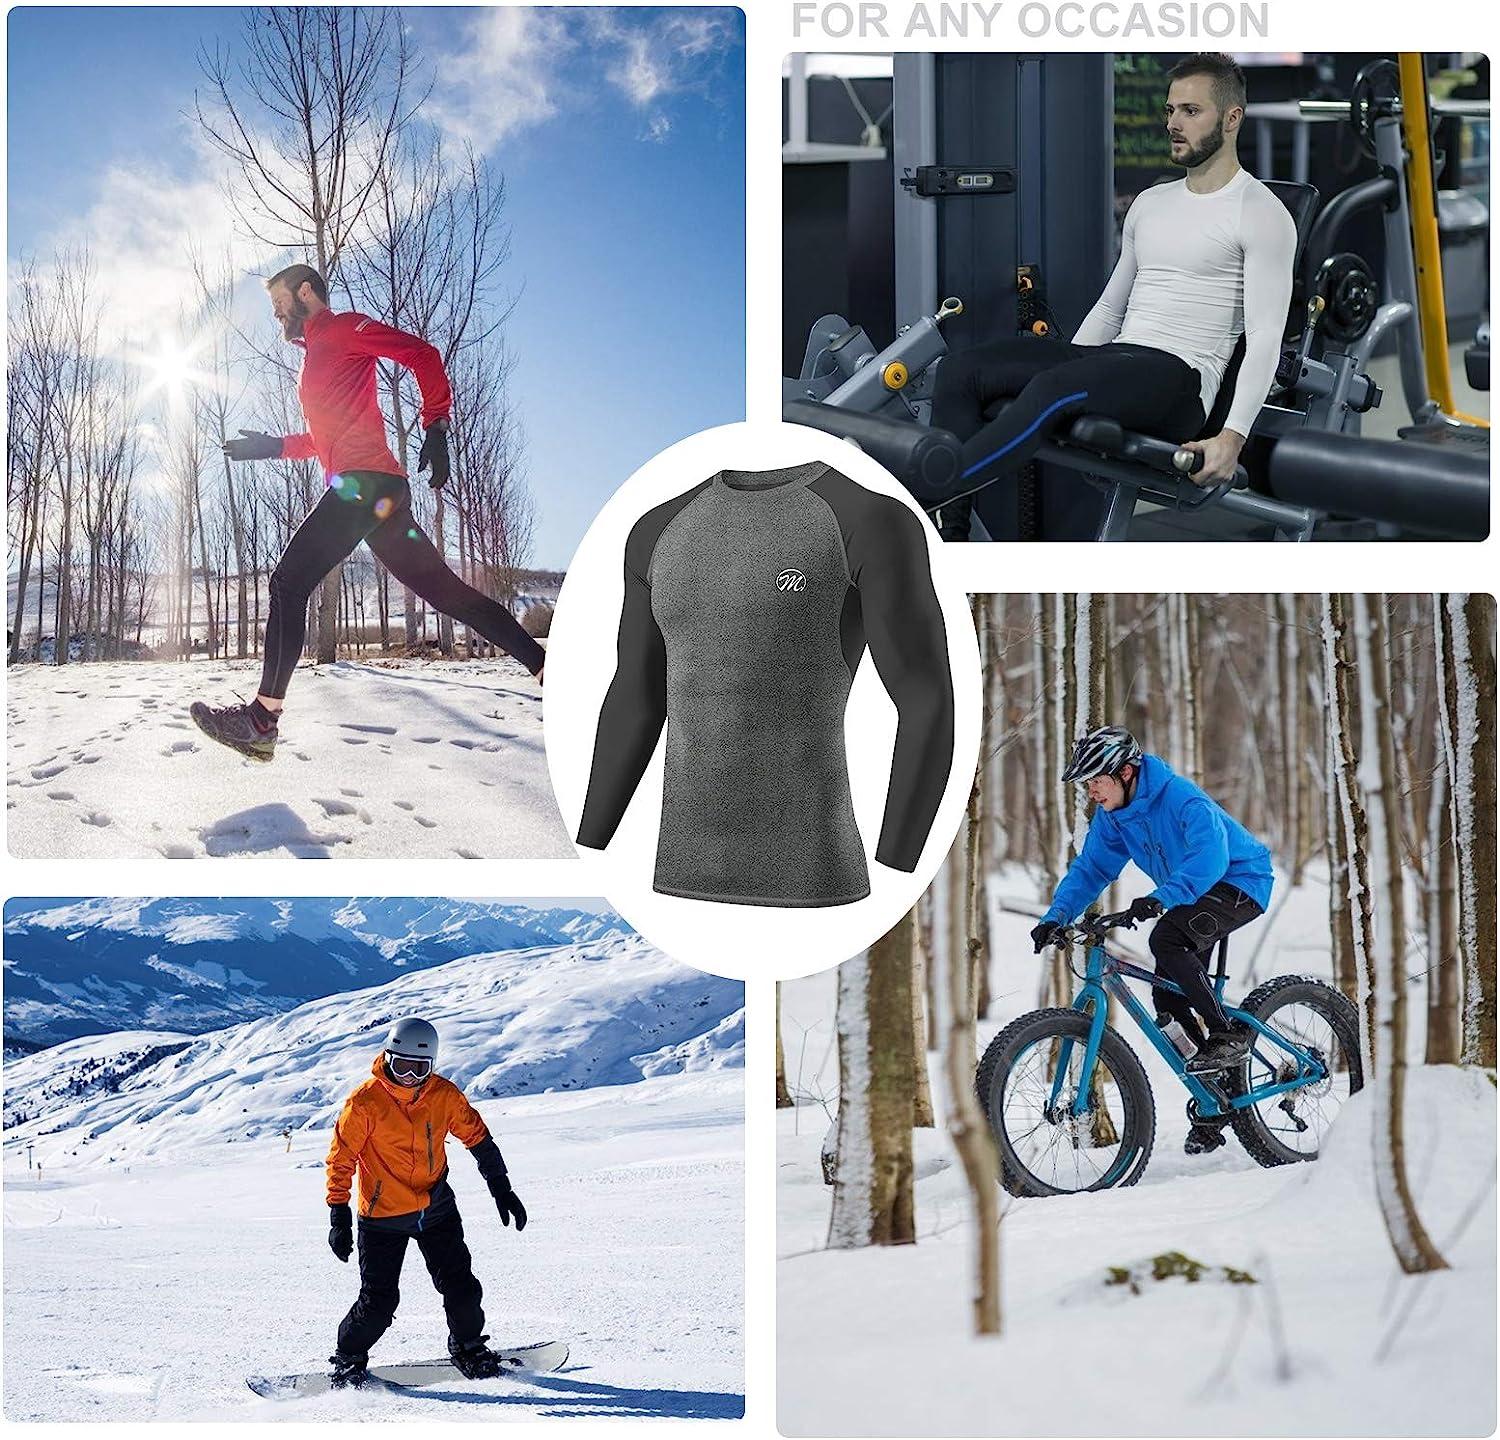 MEETWEE Men's Thermal Underwear Set, Winter Ski Gear Fleece Lined Long  Johns Base Layer Warm Top & Bottom for Skiing Black